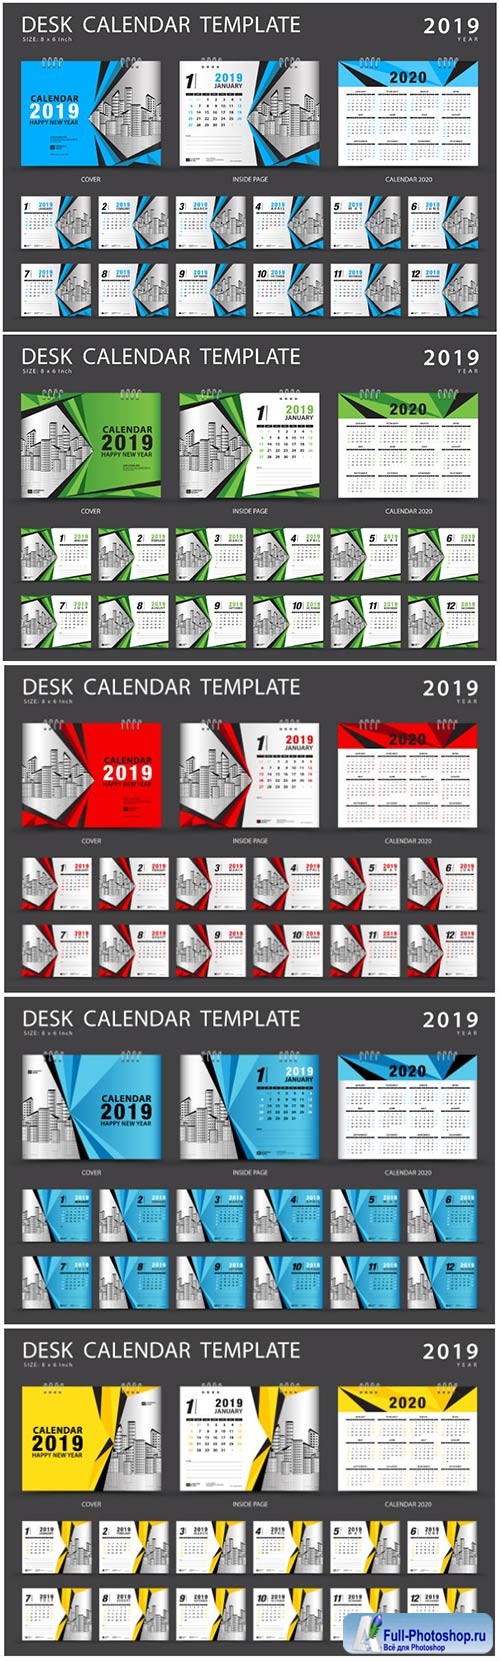 Desk calendar 2019 template creative vector design